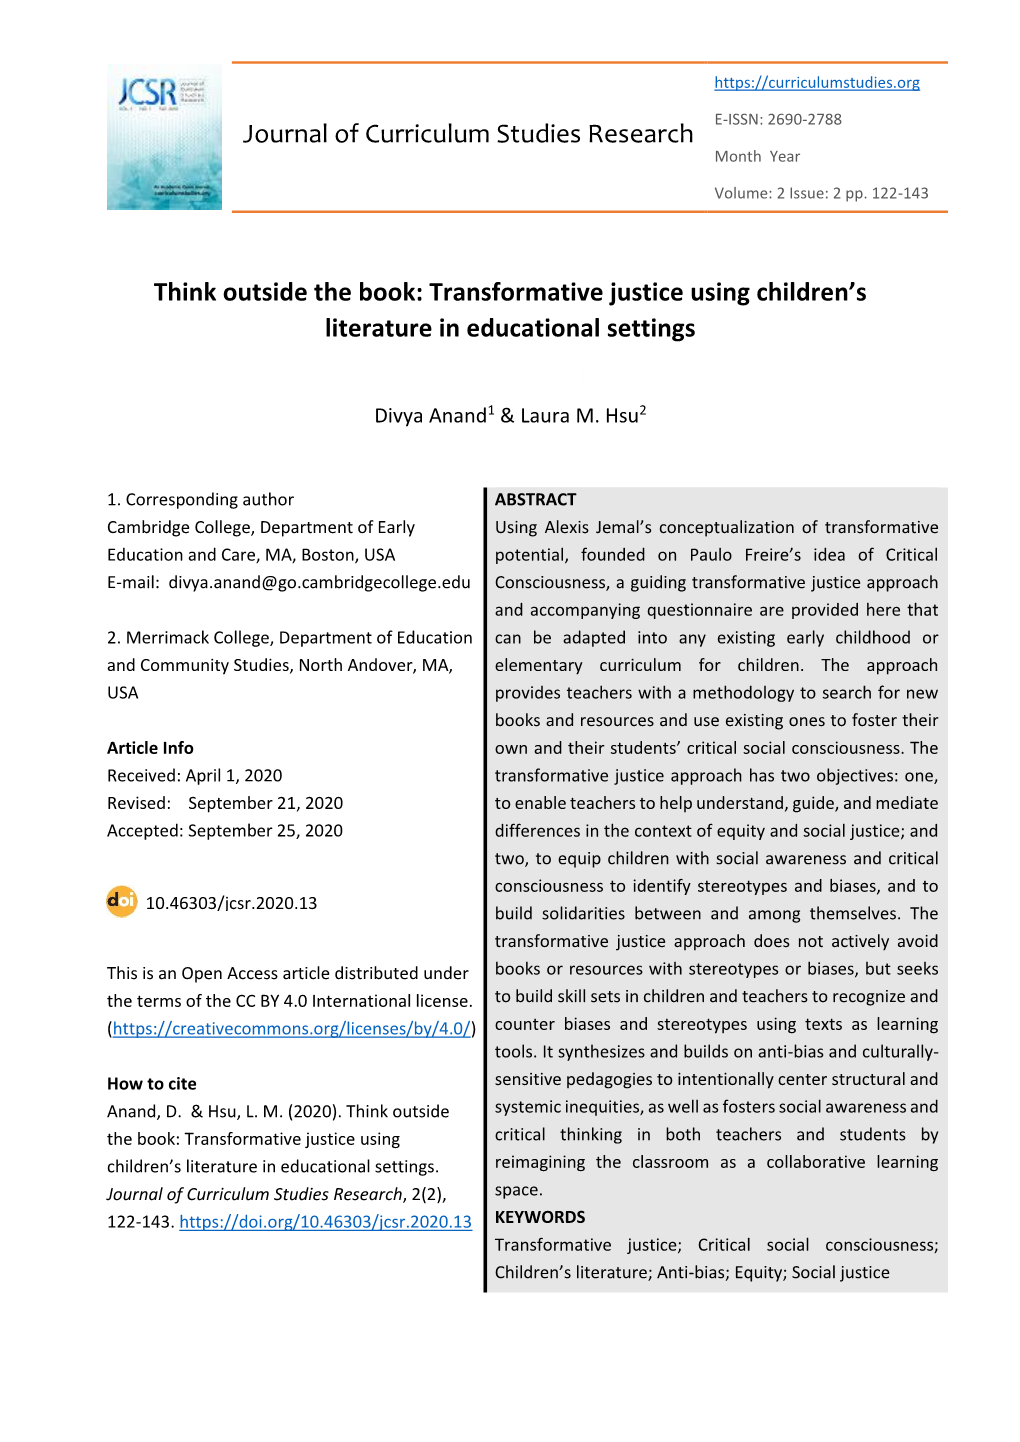 Transformative Justice Using Children's Literature in Educatio